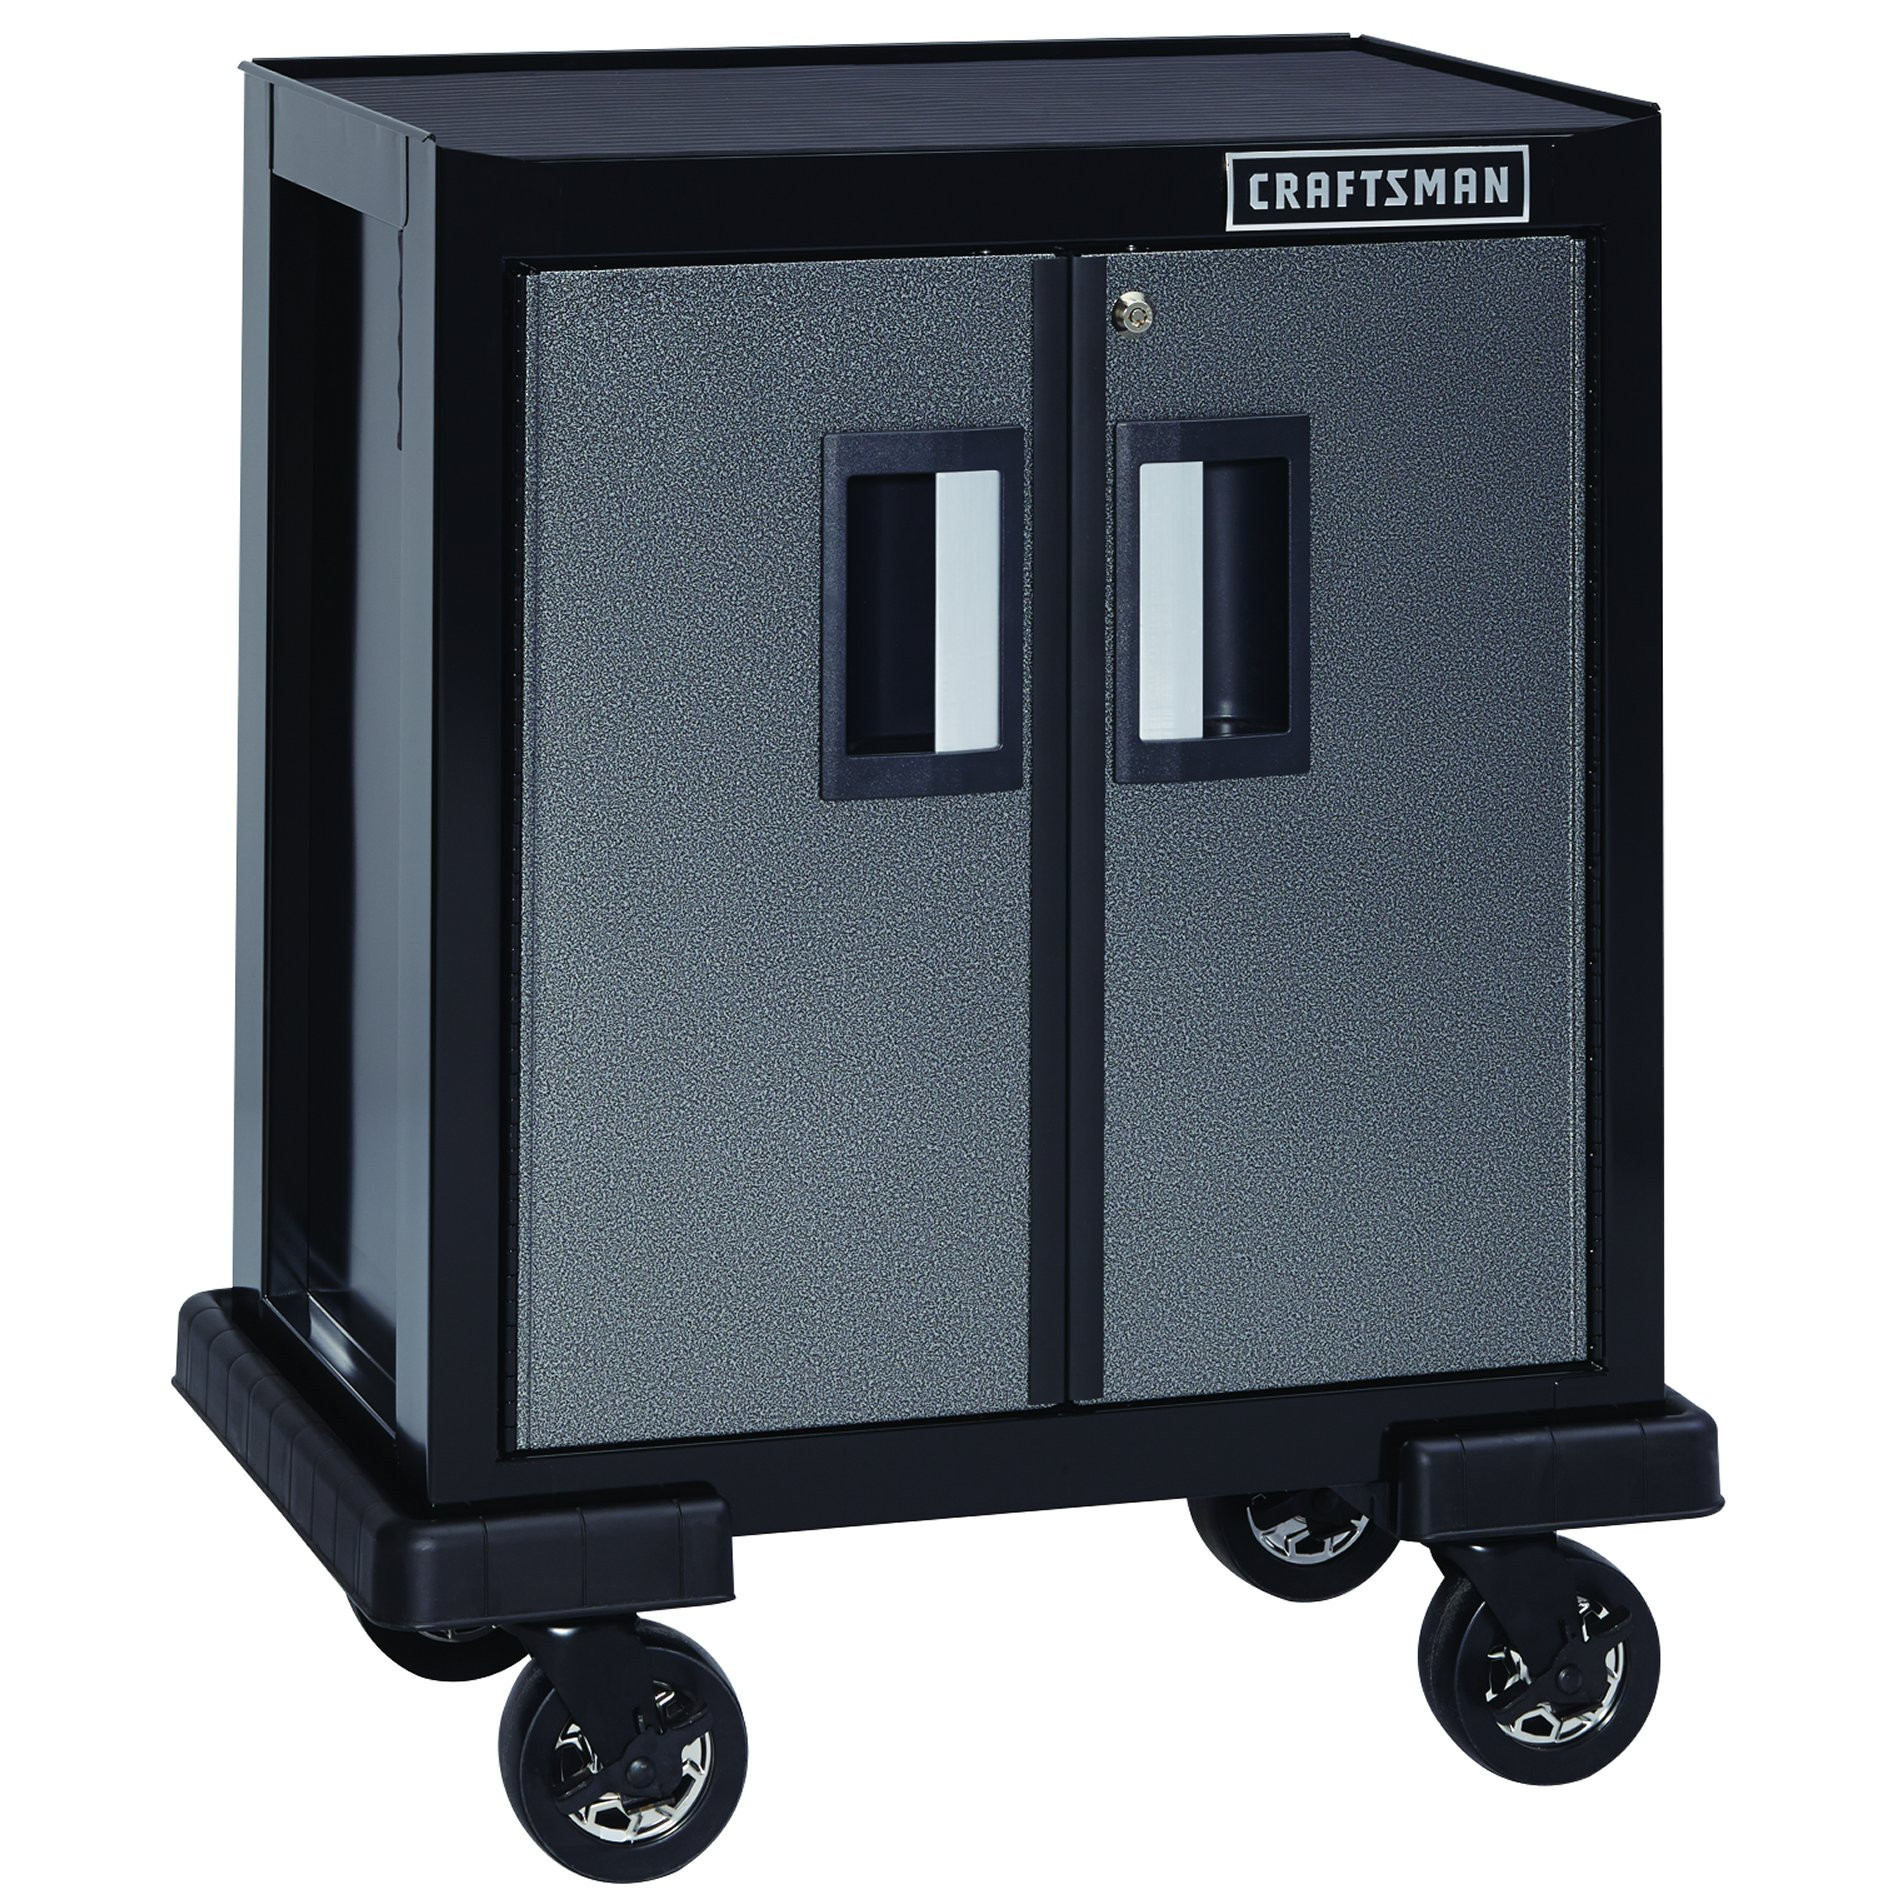 Craftsman Garage Organization
 Craftsman Premium Heavy Duty 2 Door Base Cabinet Tools